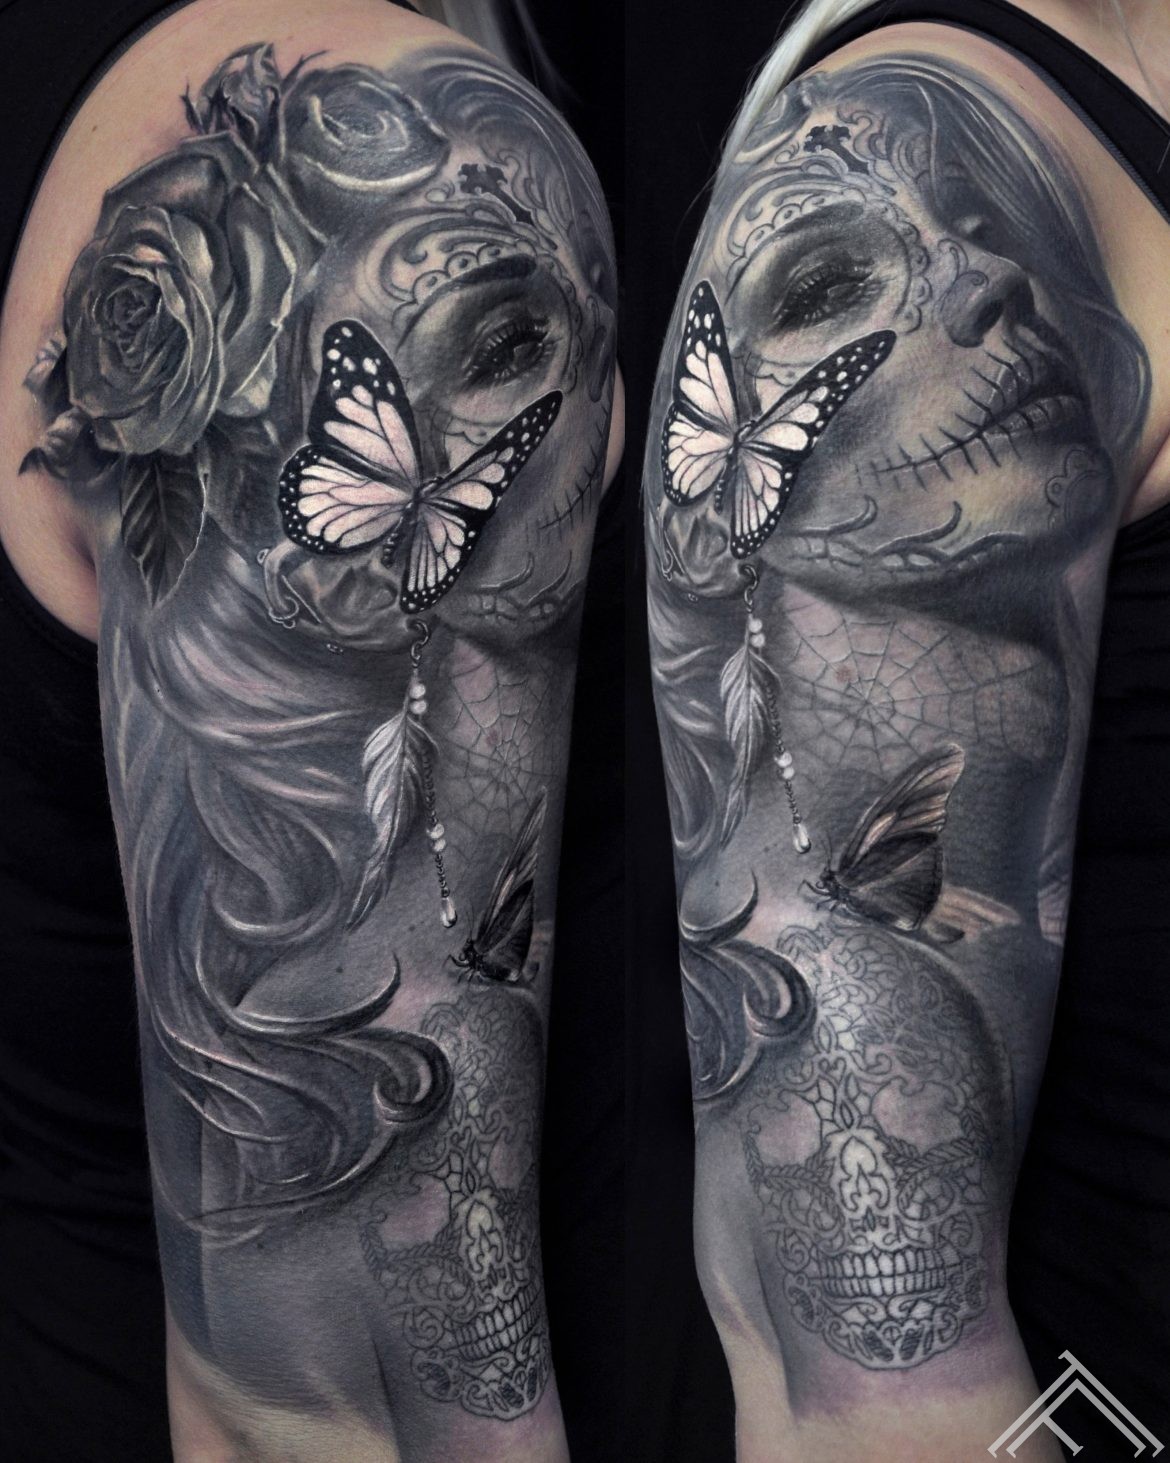 muerta_roses_butterfly_feather_woman_tattoo_tattoofrequency_marispavlo1